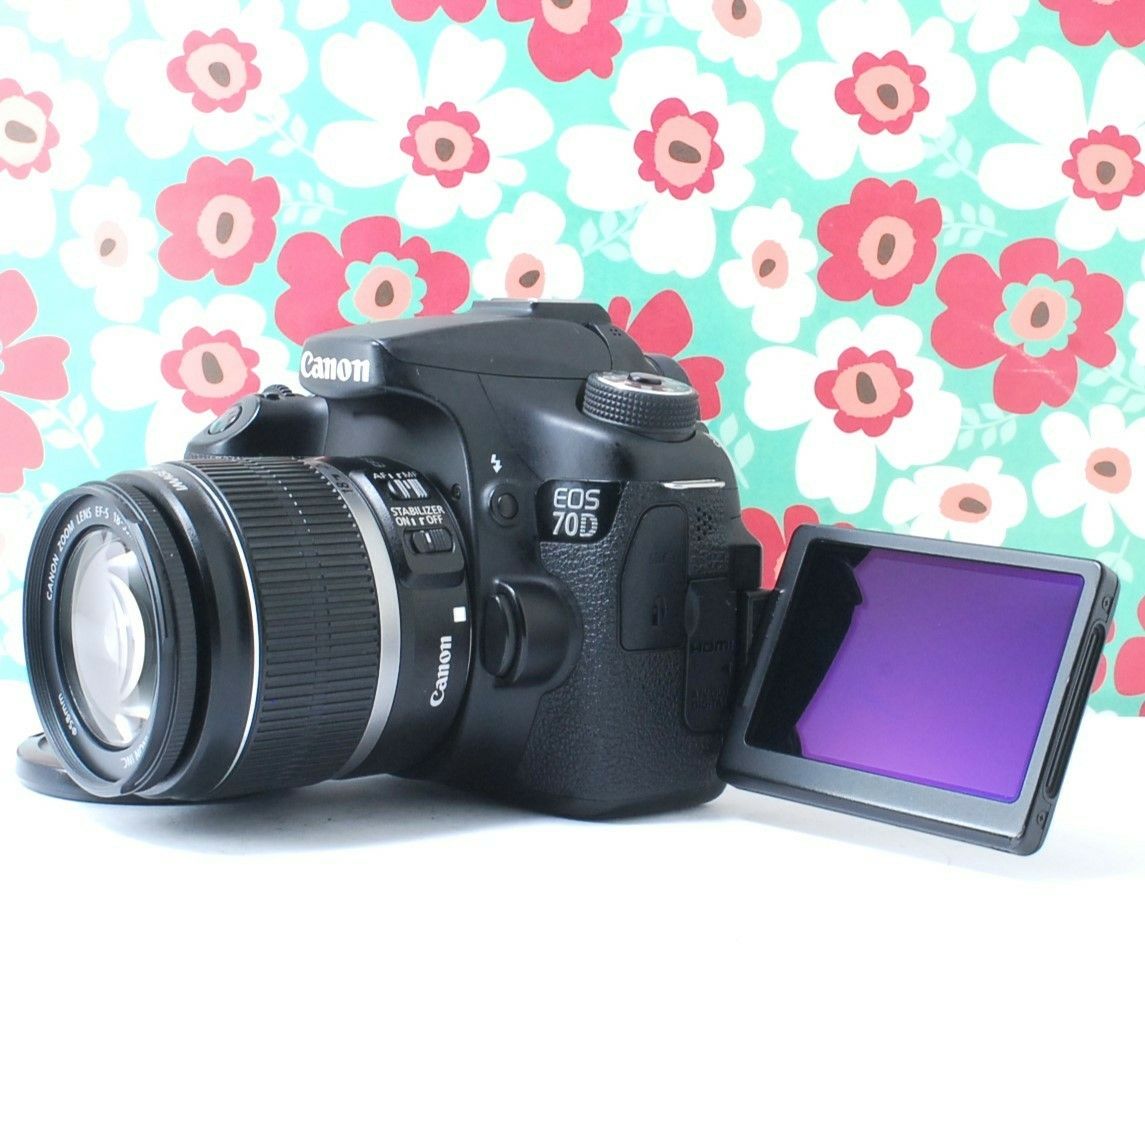 Wi-Fi＆自撮り Canon EOS 70D 高性能デジタル一眼レフカメラ 秋冬の 